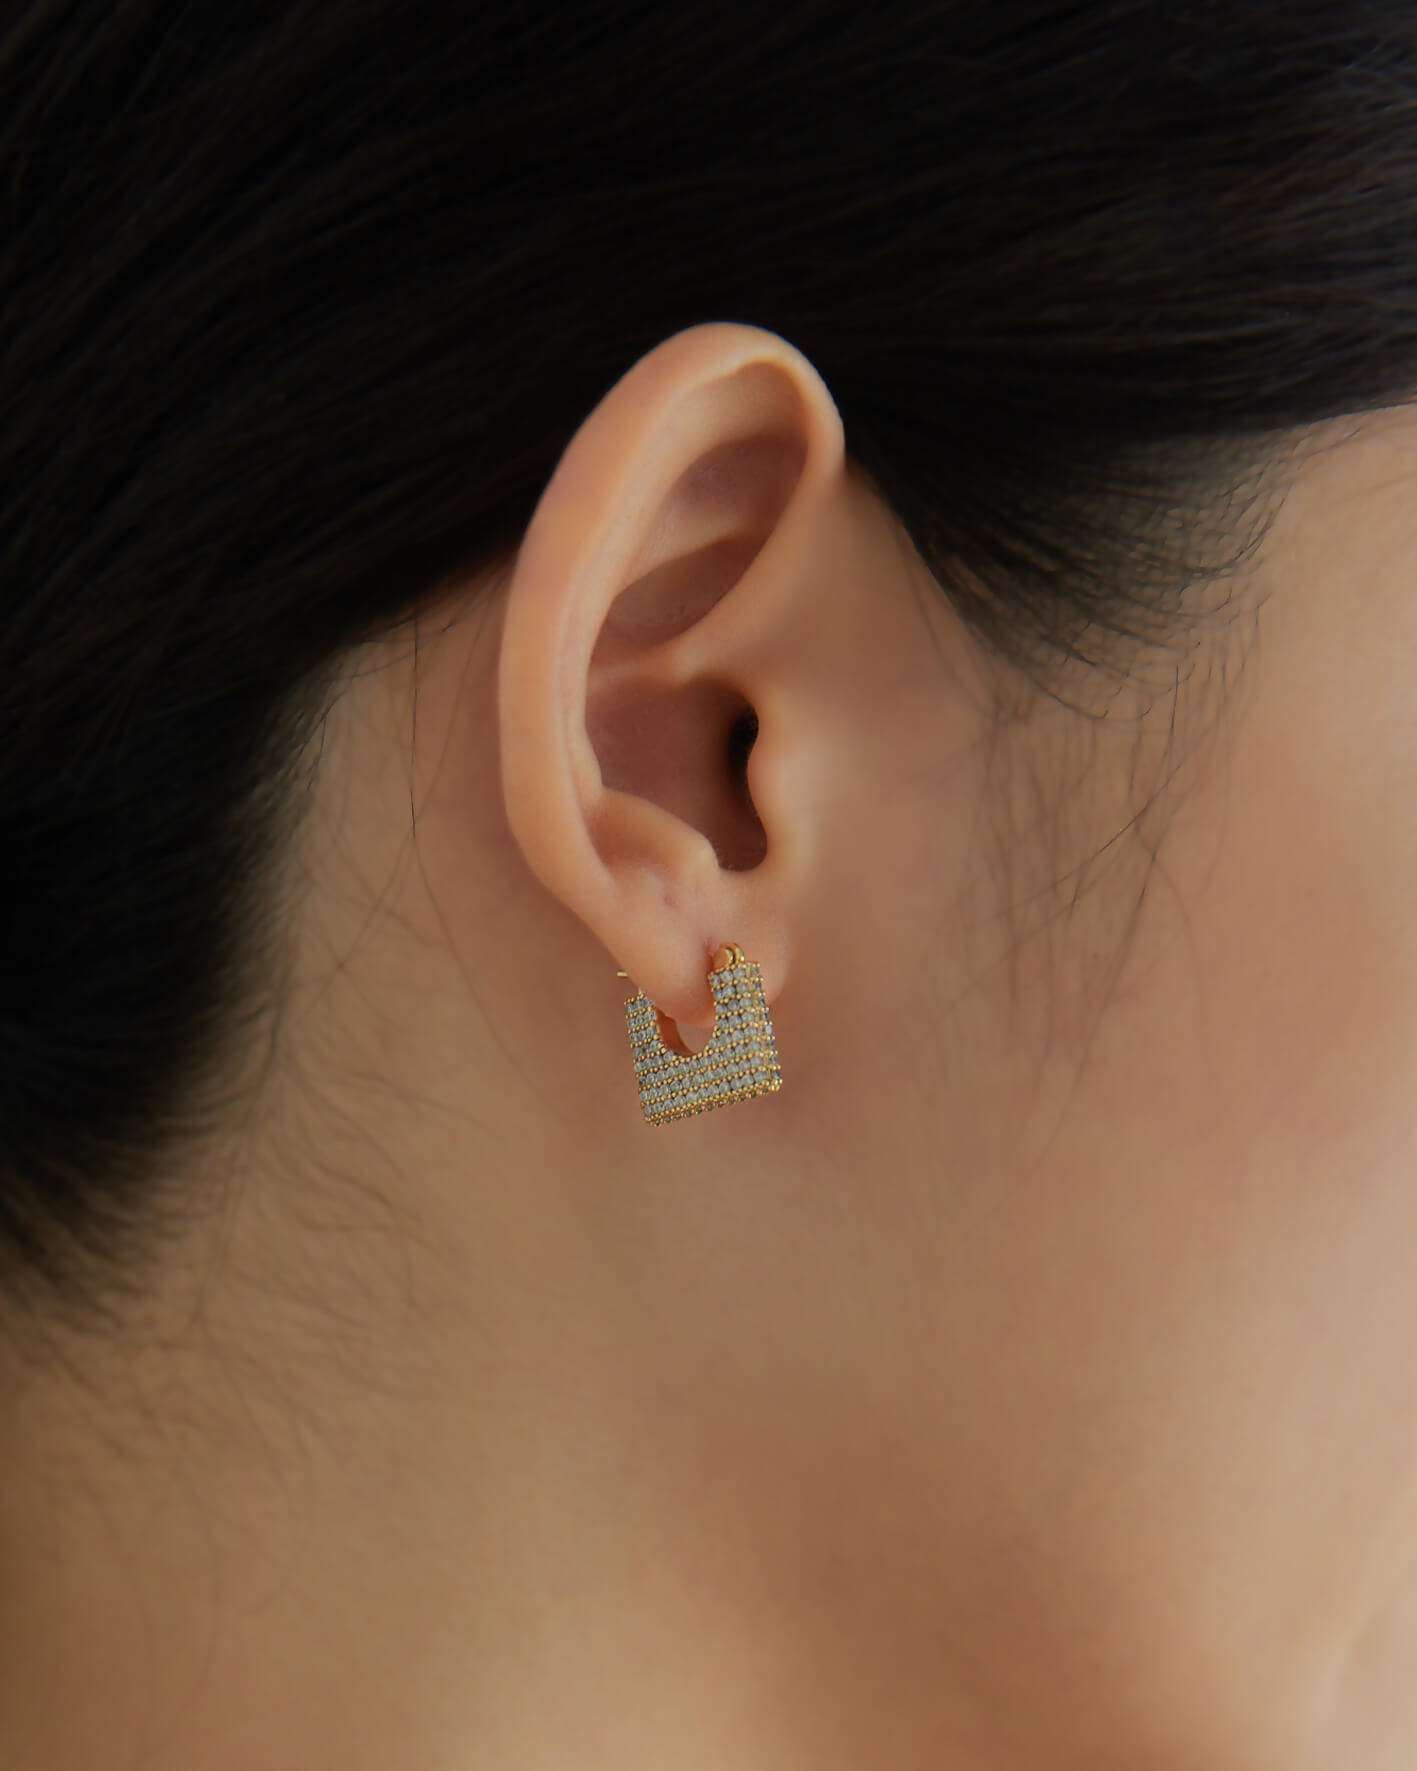 Eco安珂,韓國飾品,韓國耳環,耳針式耳環,C圈耳環,華麗小耳環,鑽耳環